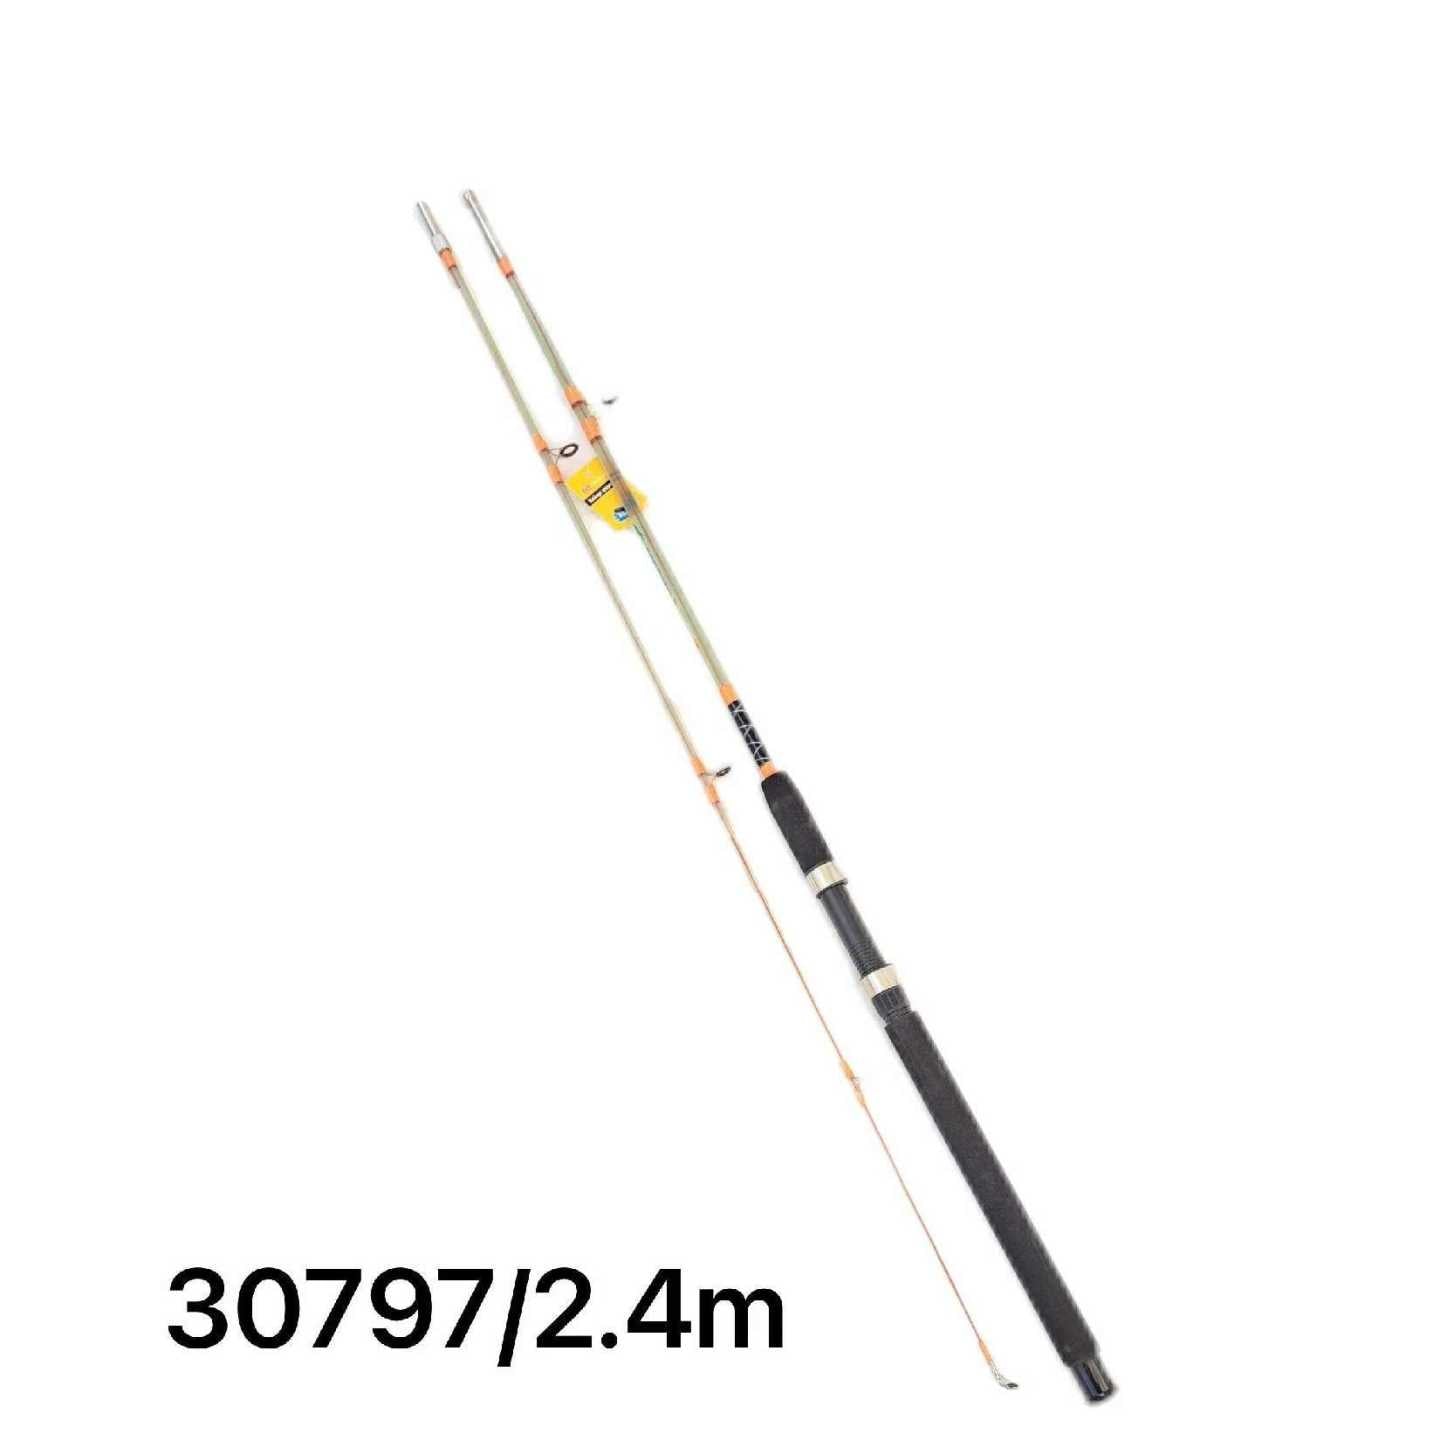 Fishing rod - Split - 2.4m - 30797